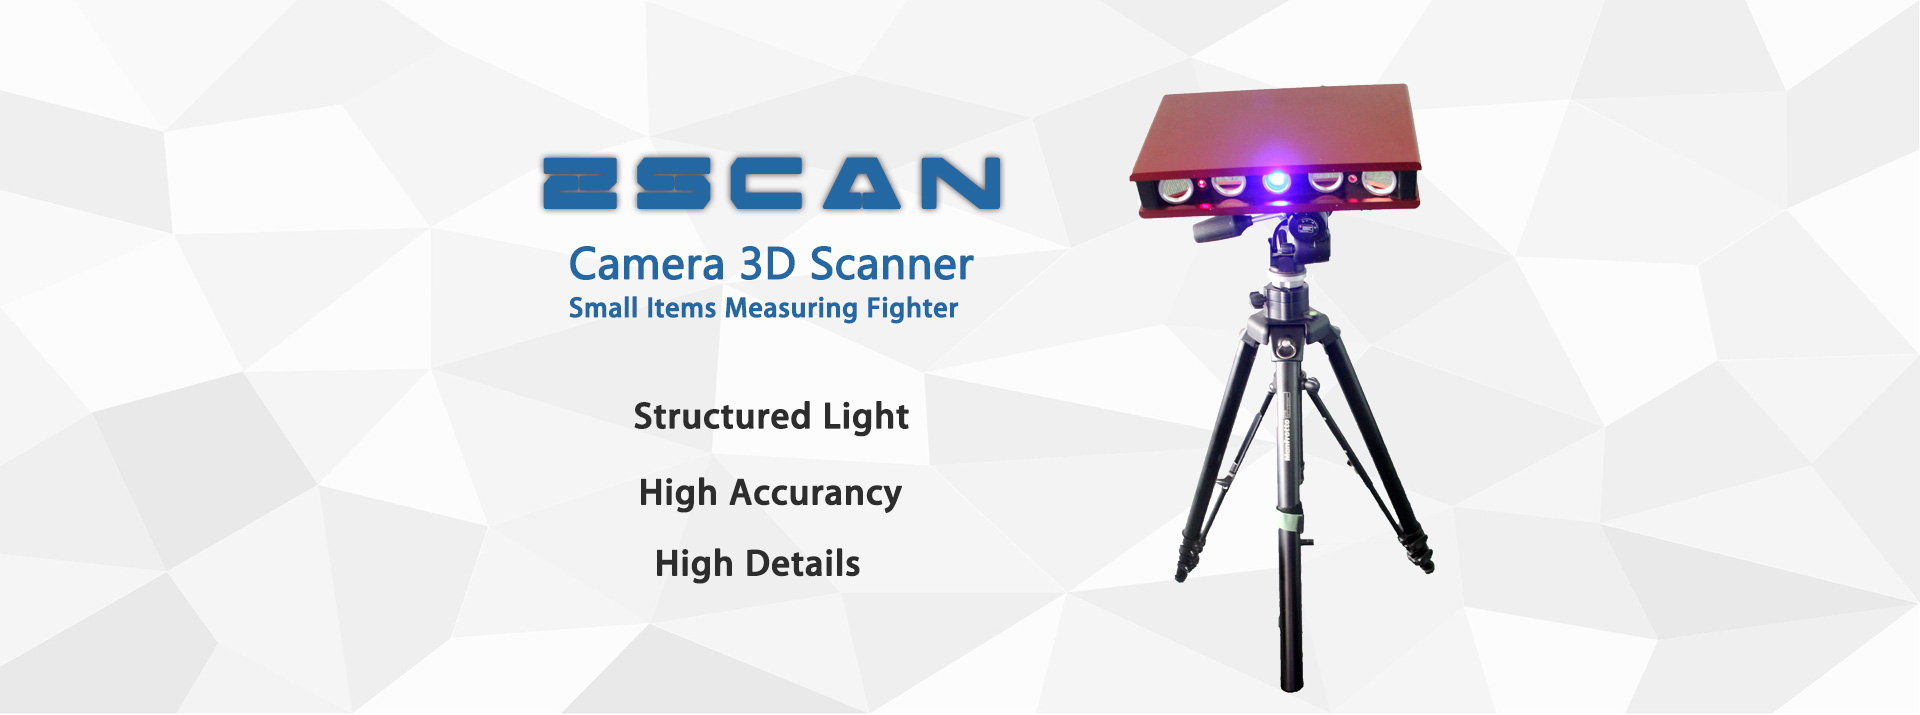 ZSCAN-D structure light 3D scanner